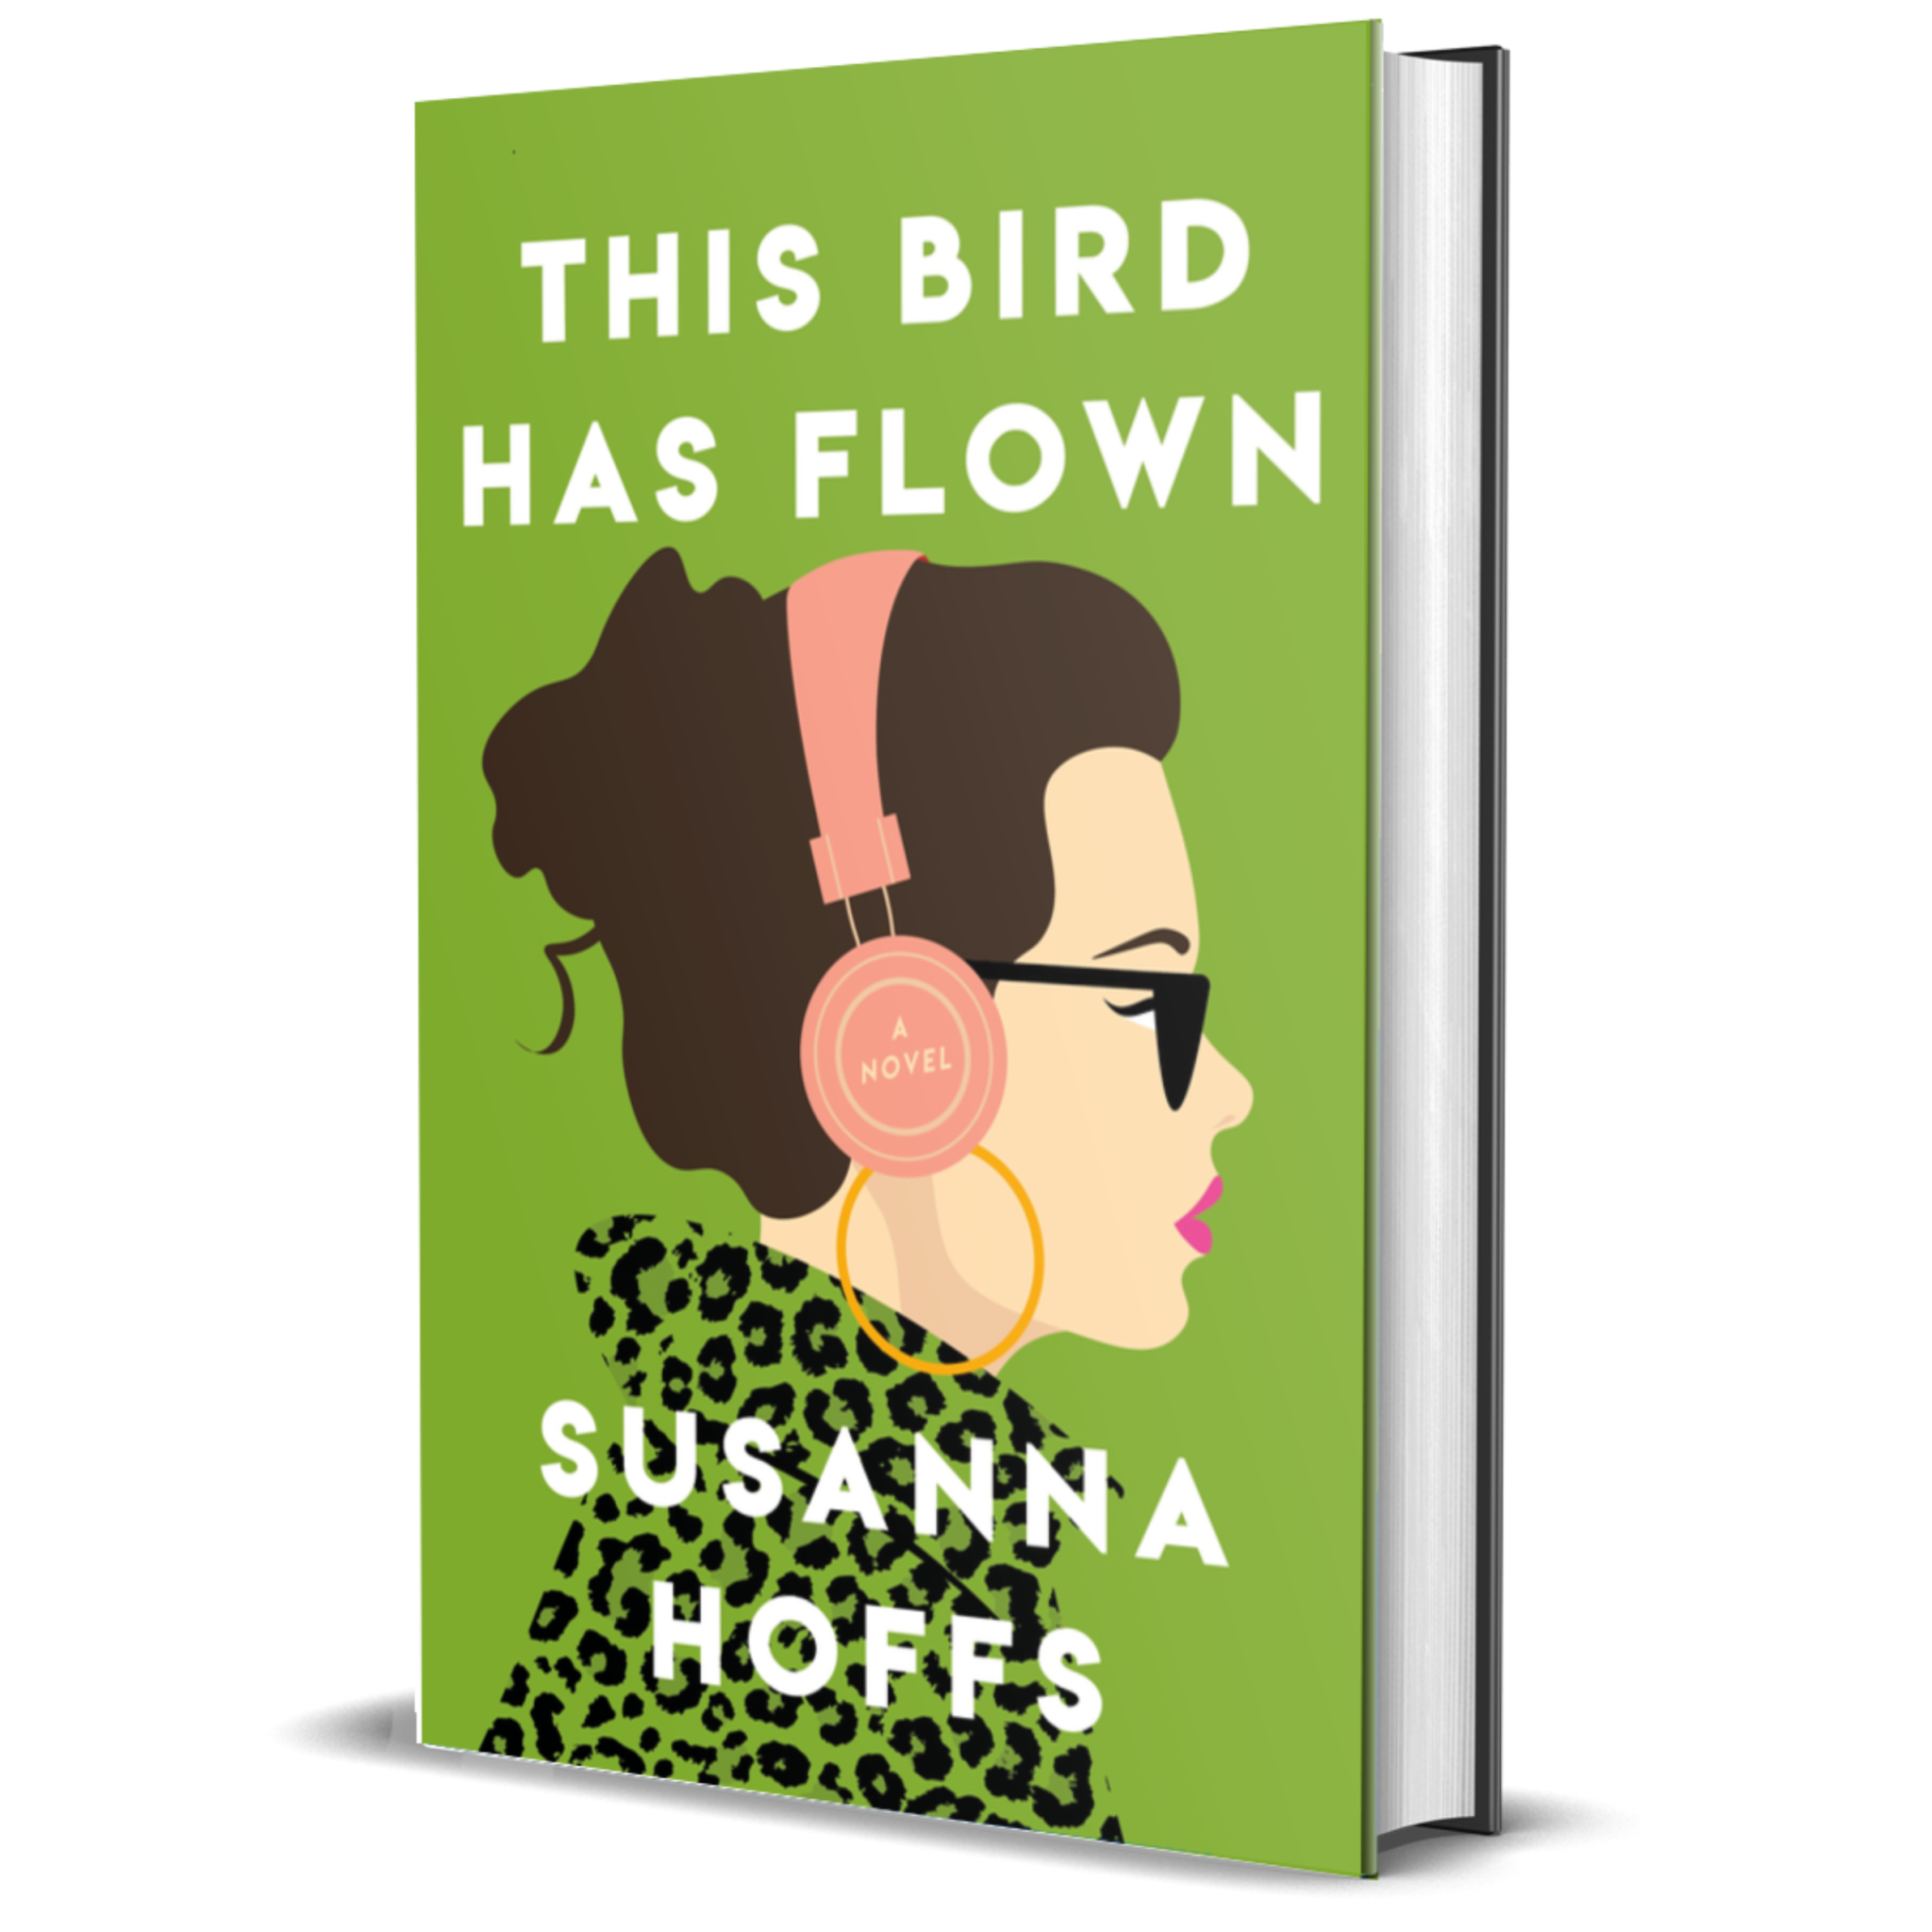 Susanna Hoffs The Bangles, Author This Bird Has Flown San Diego